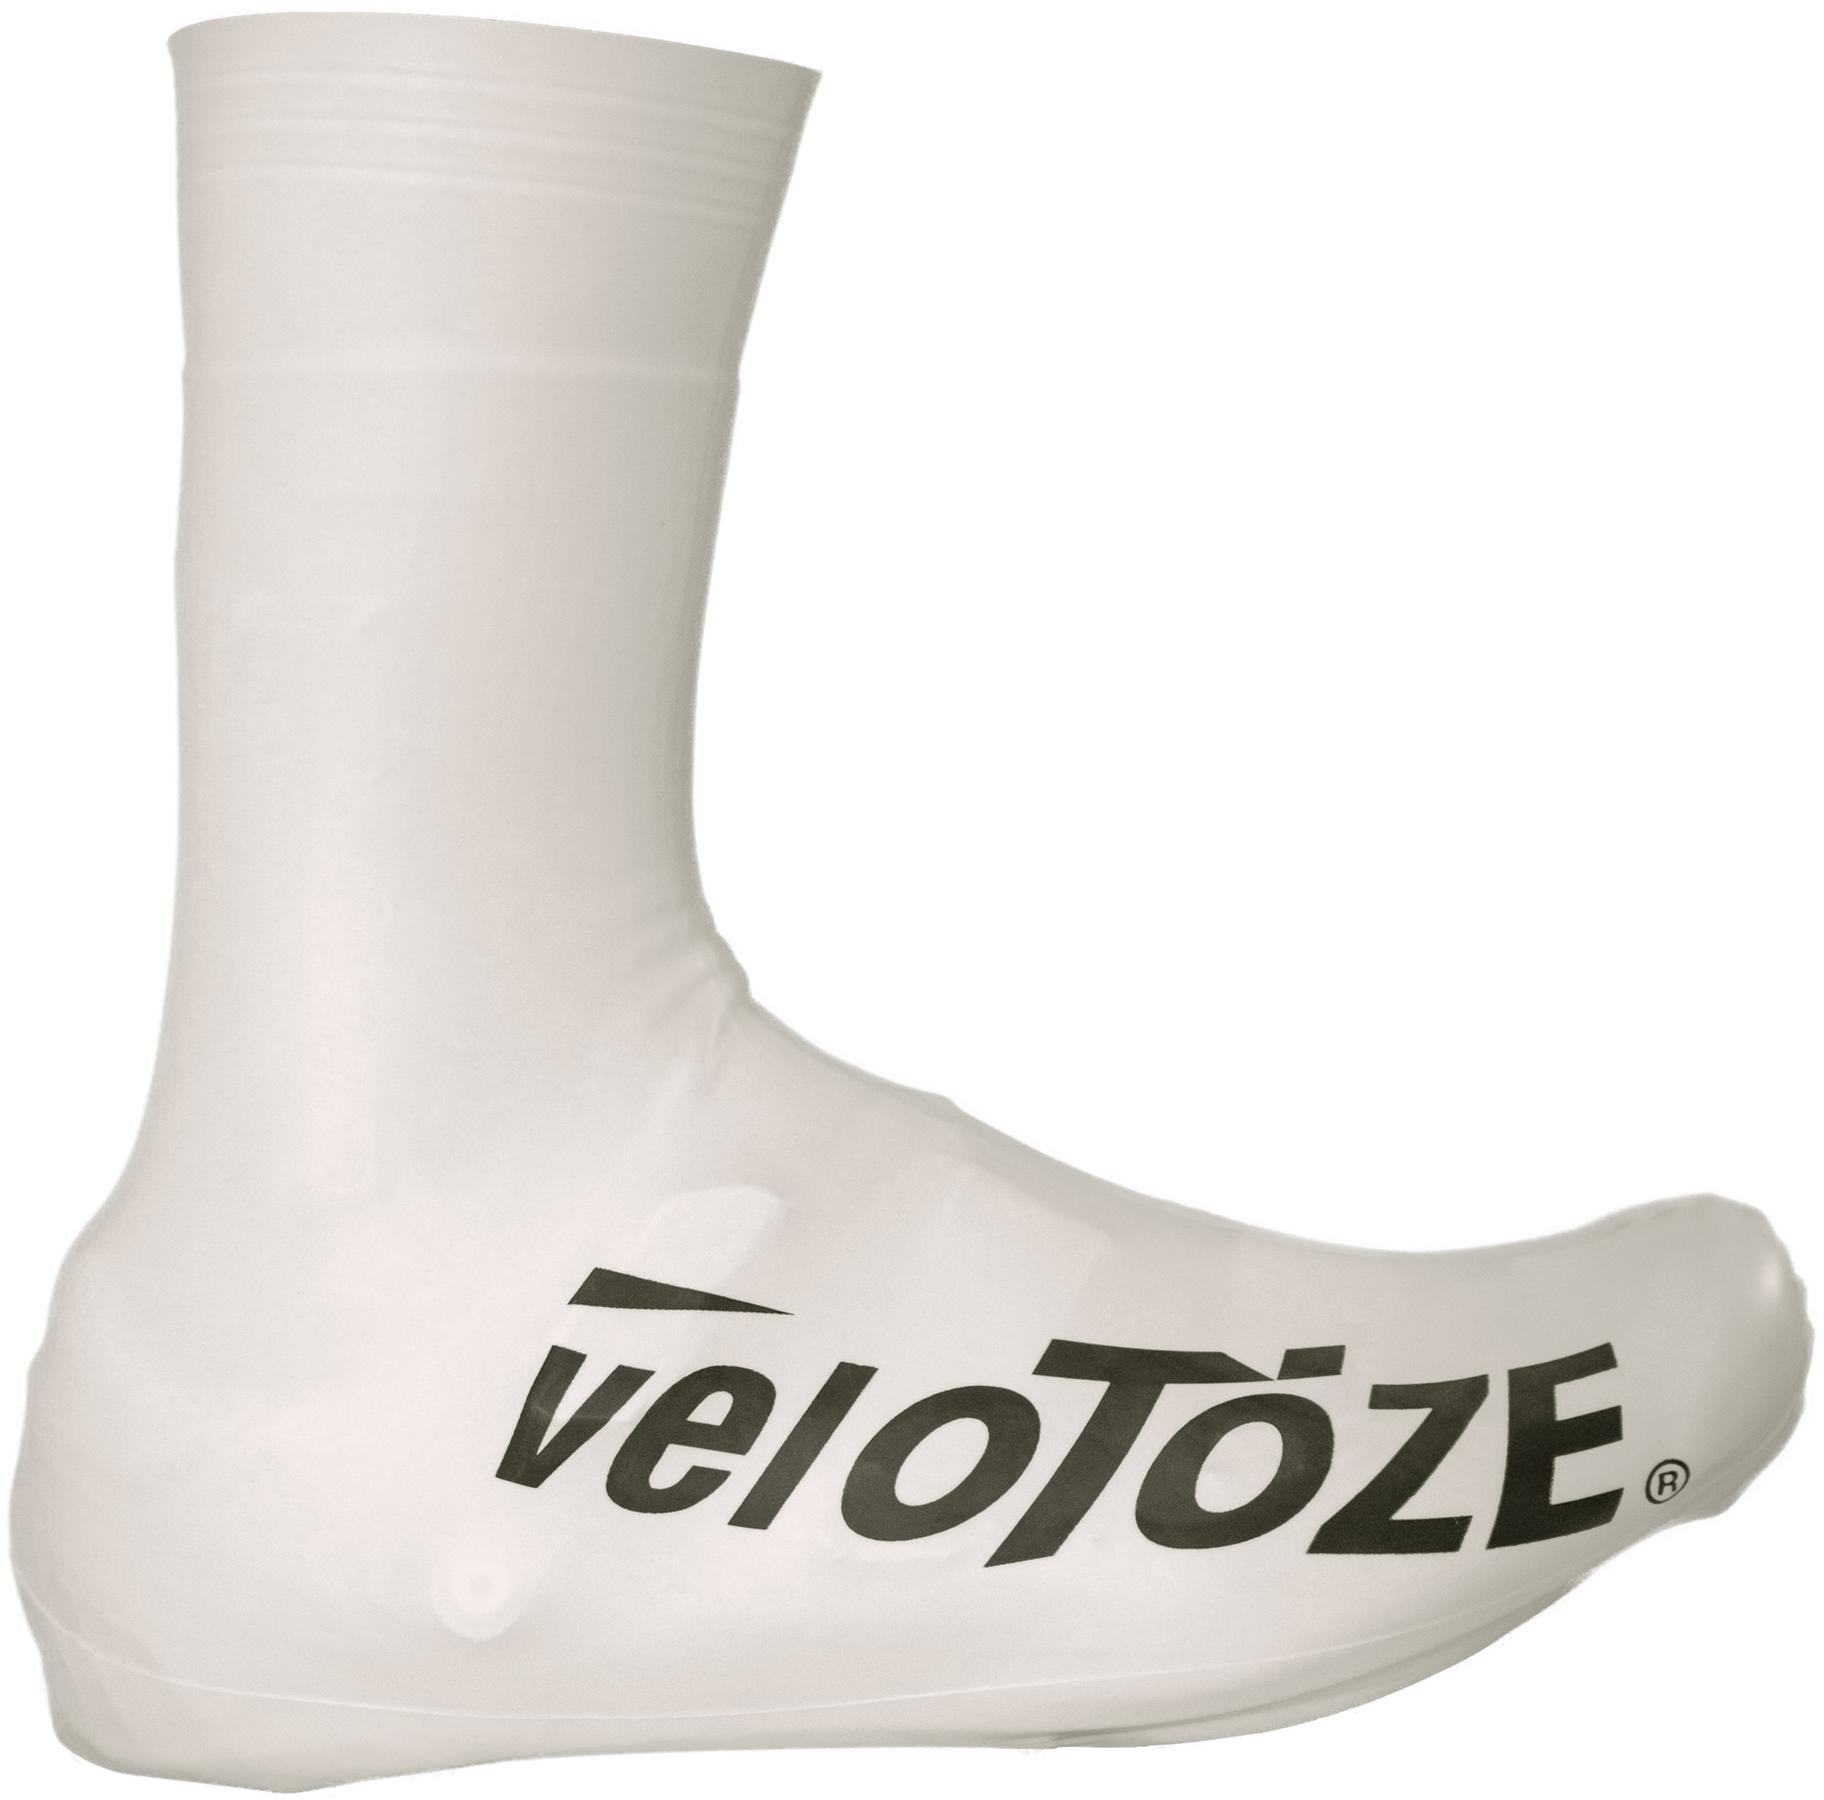 Velotoze Tall Shoe Covers 2.0 - White